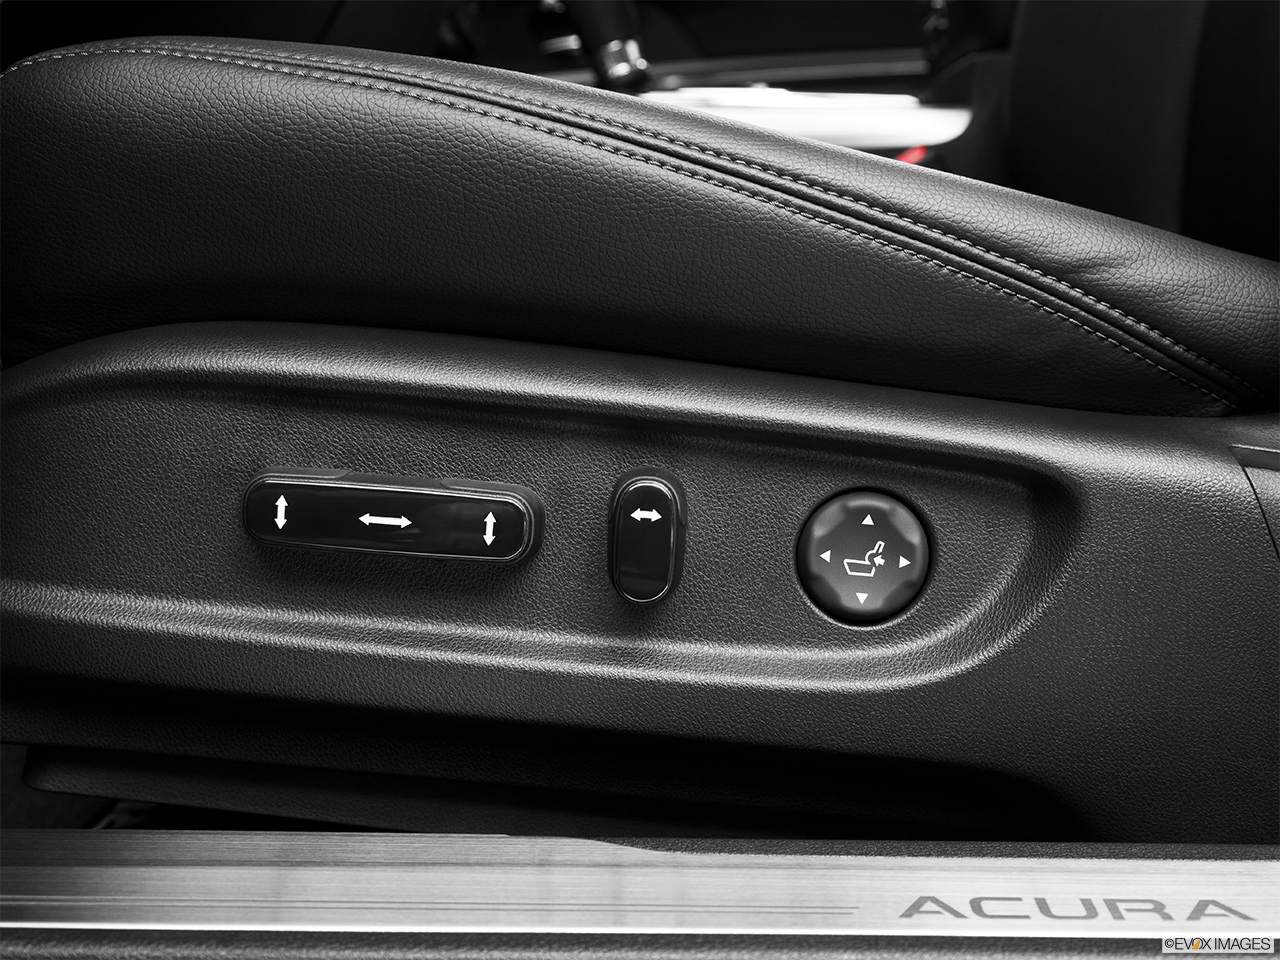 2014 Acura RLX Base Seat Adjustment Controllers. 